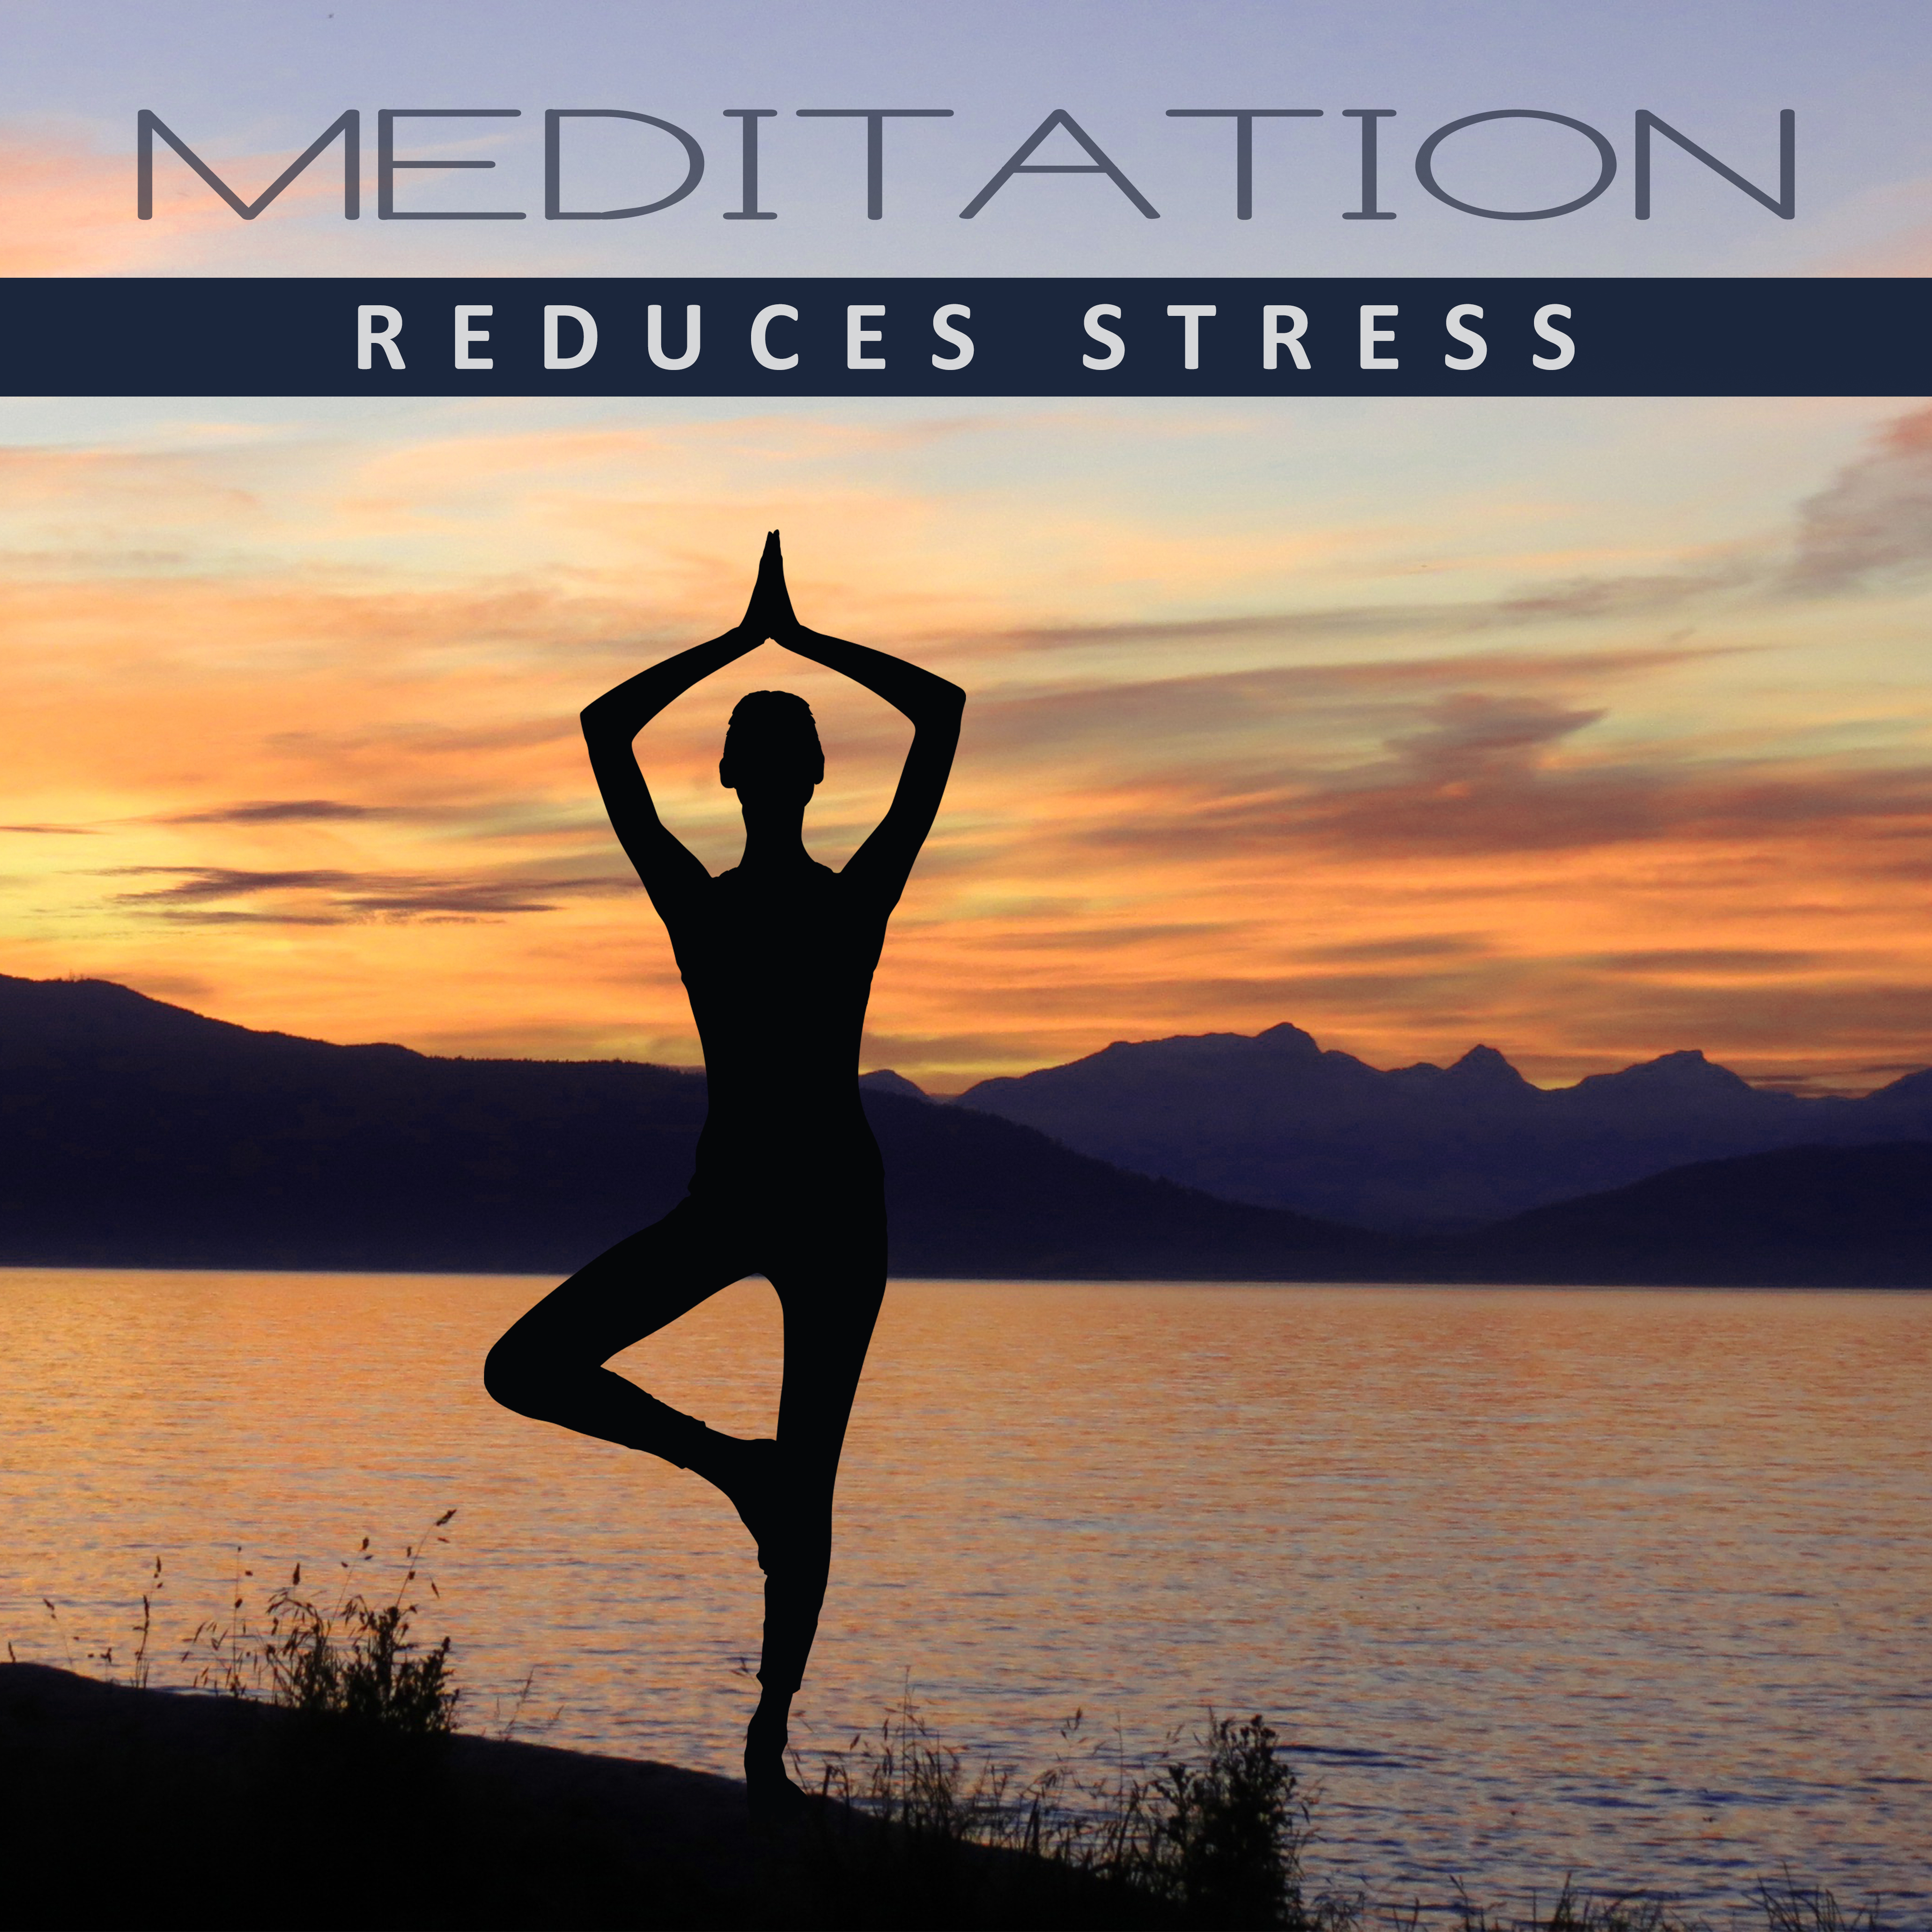 Meditation Reduces Stress – Training Yoga, Relax, Chakra Balancing, Yoga Poses, Meditate, Peaceful Music to Rest